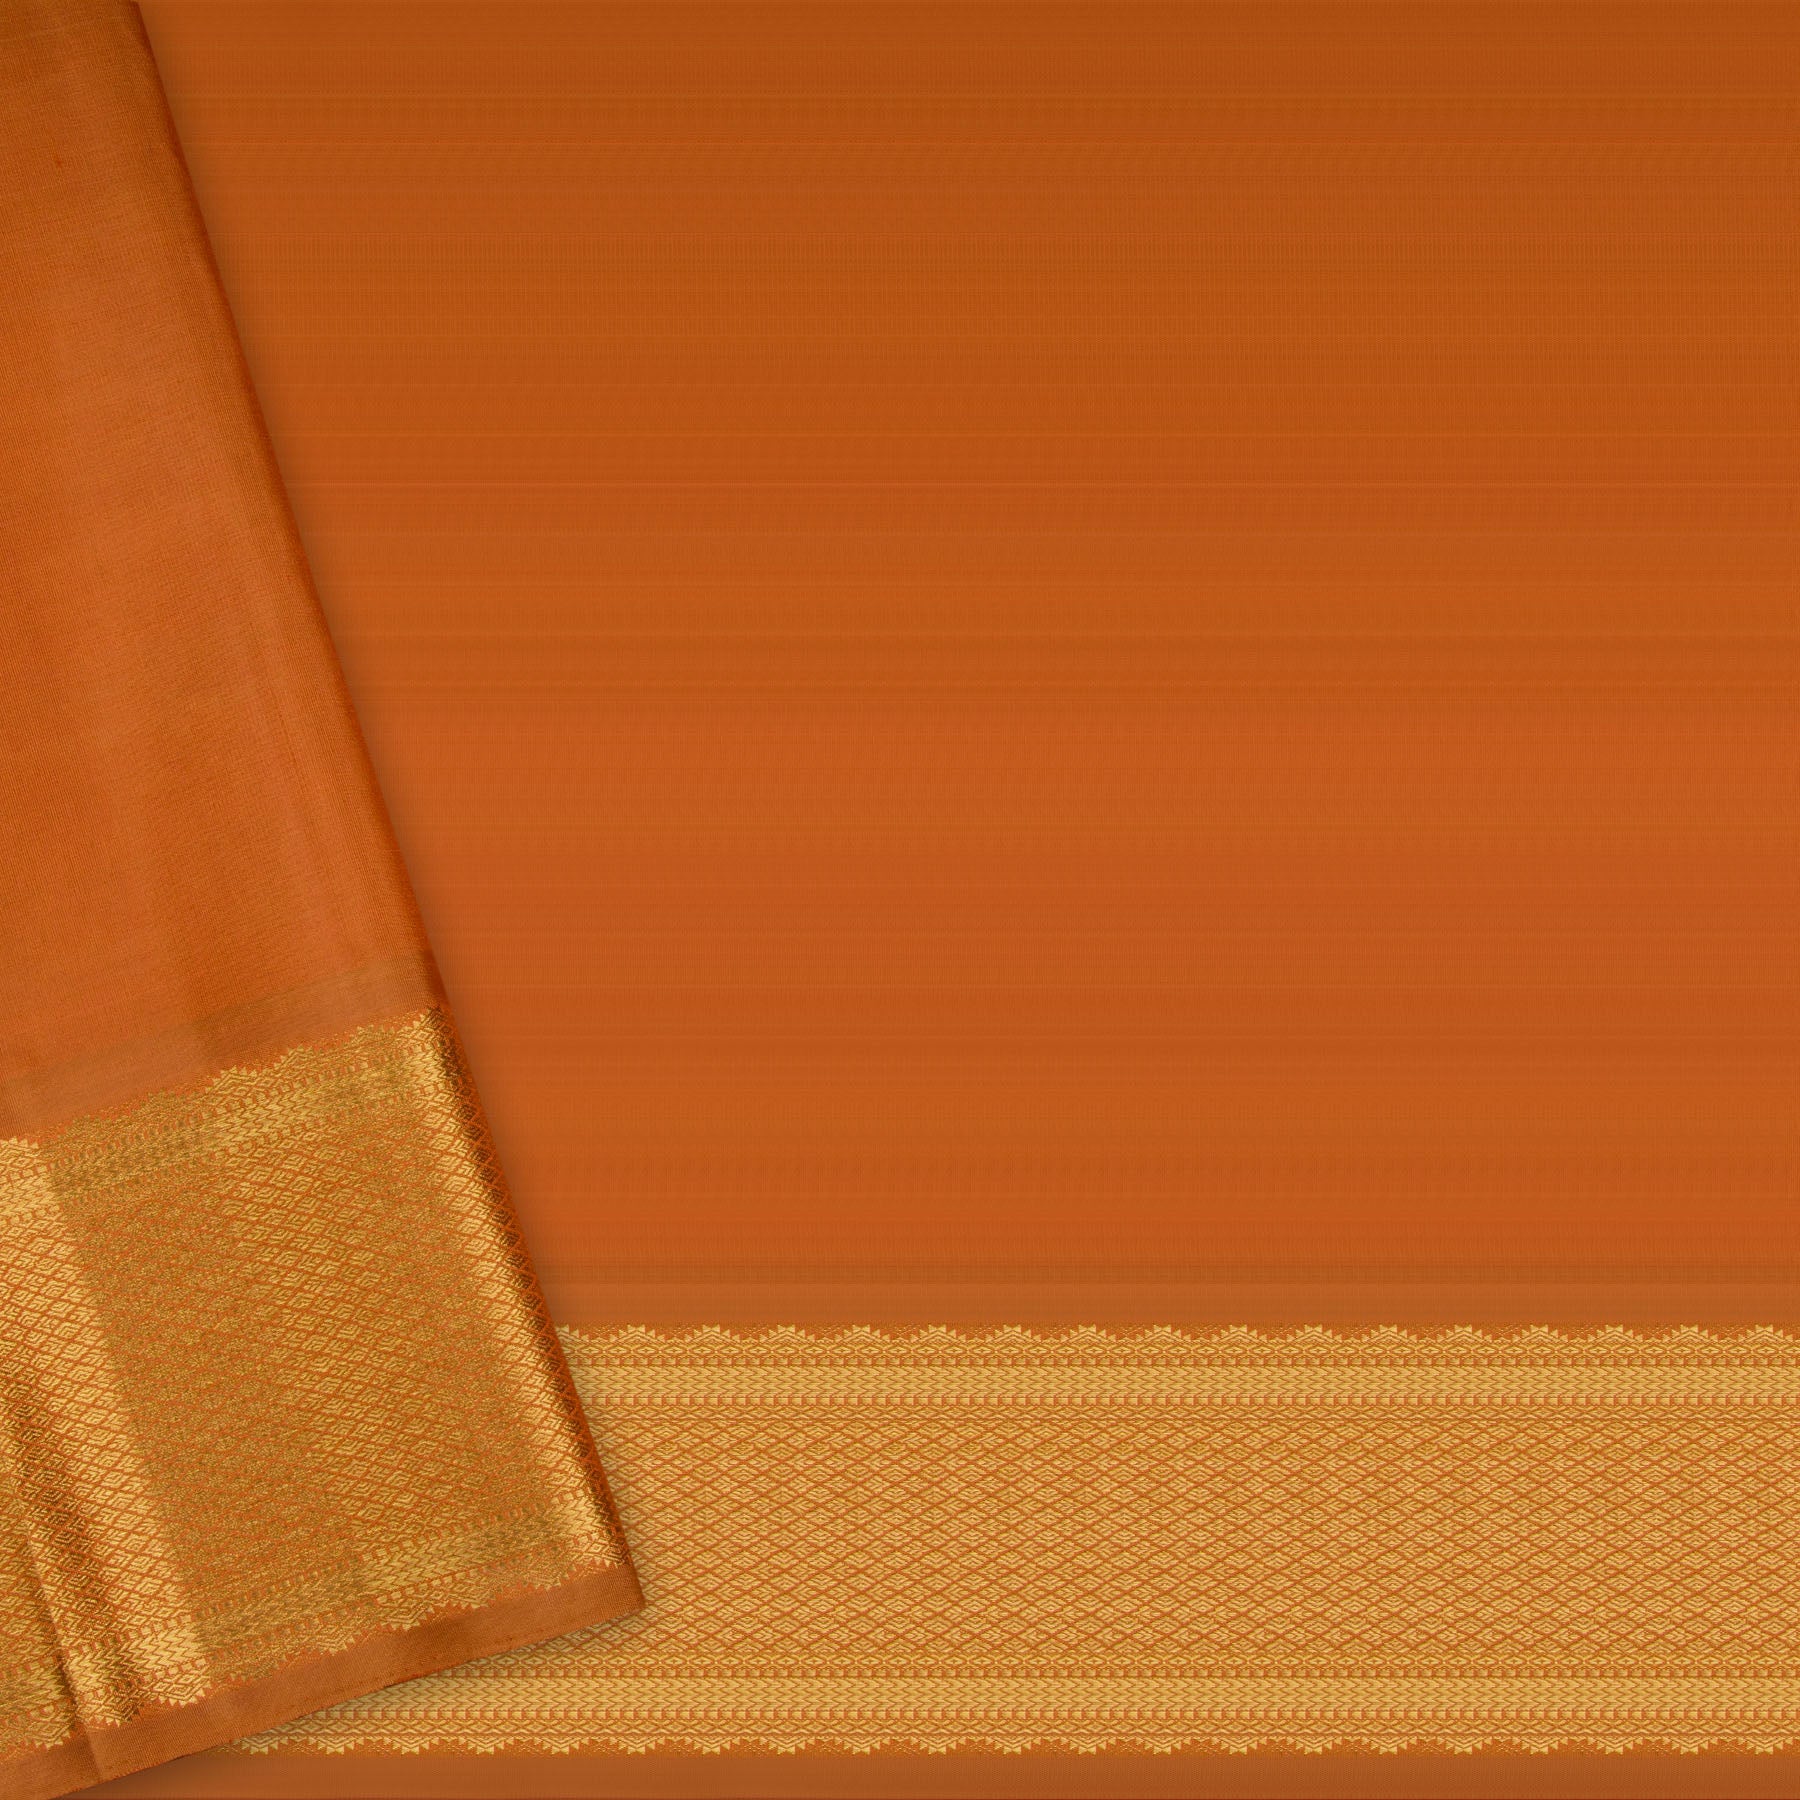 Kanakavalli Kanjivaram Silk Sari 22-595-HS001-12461 - Blouse View